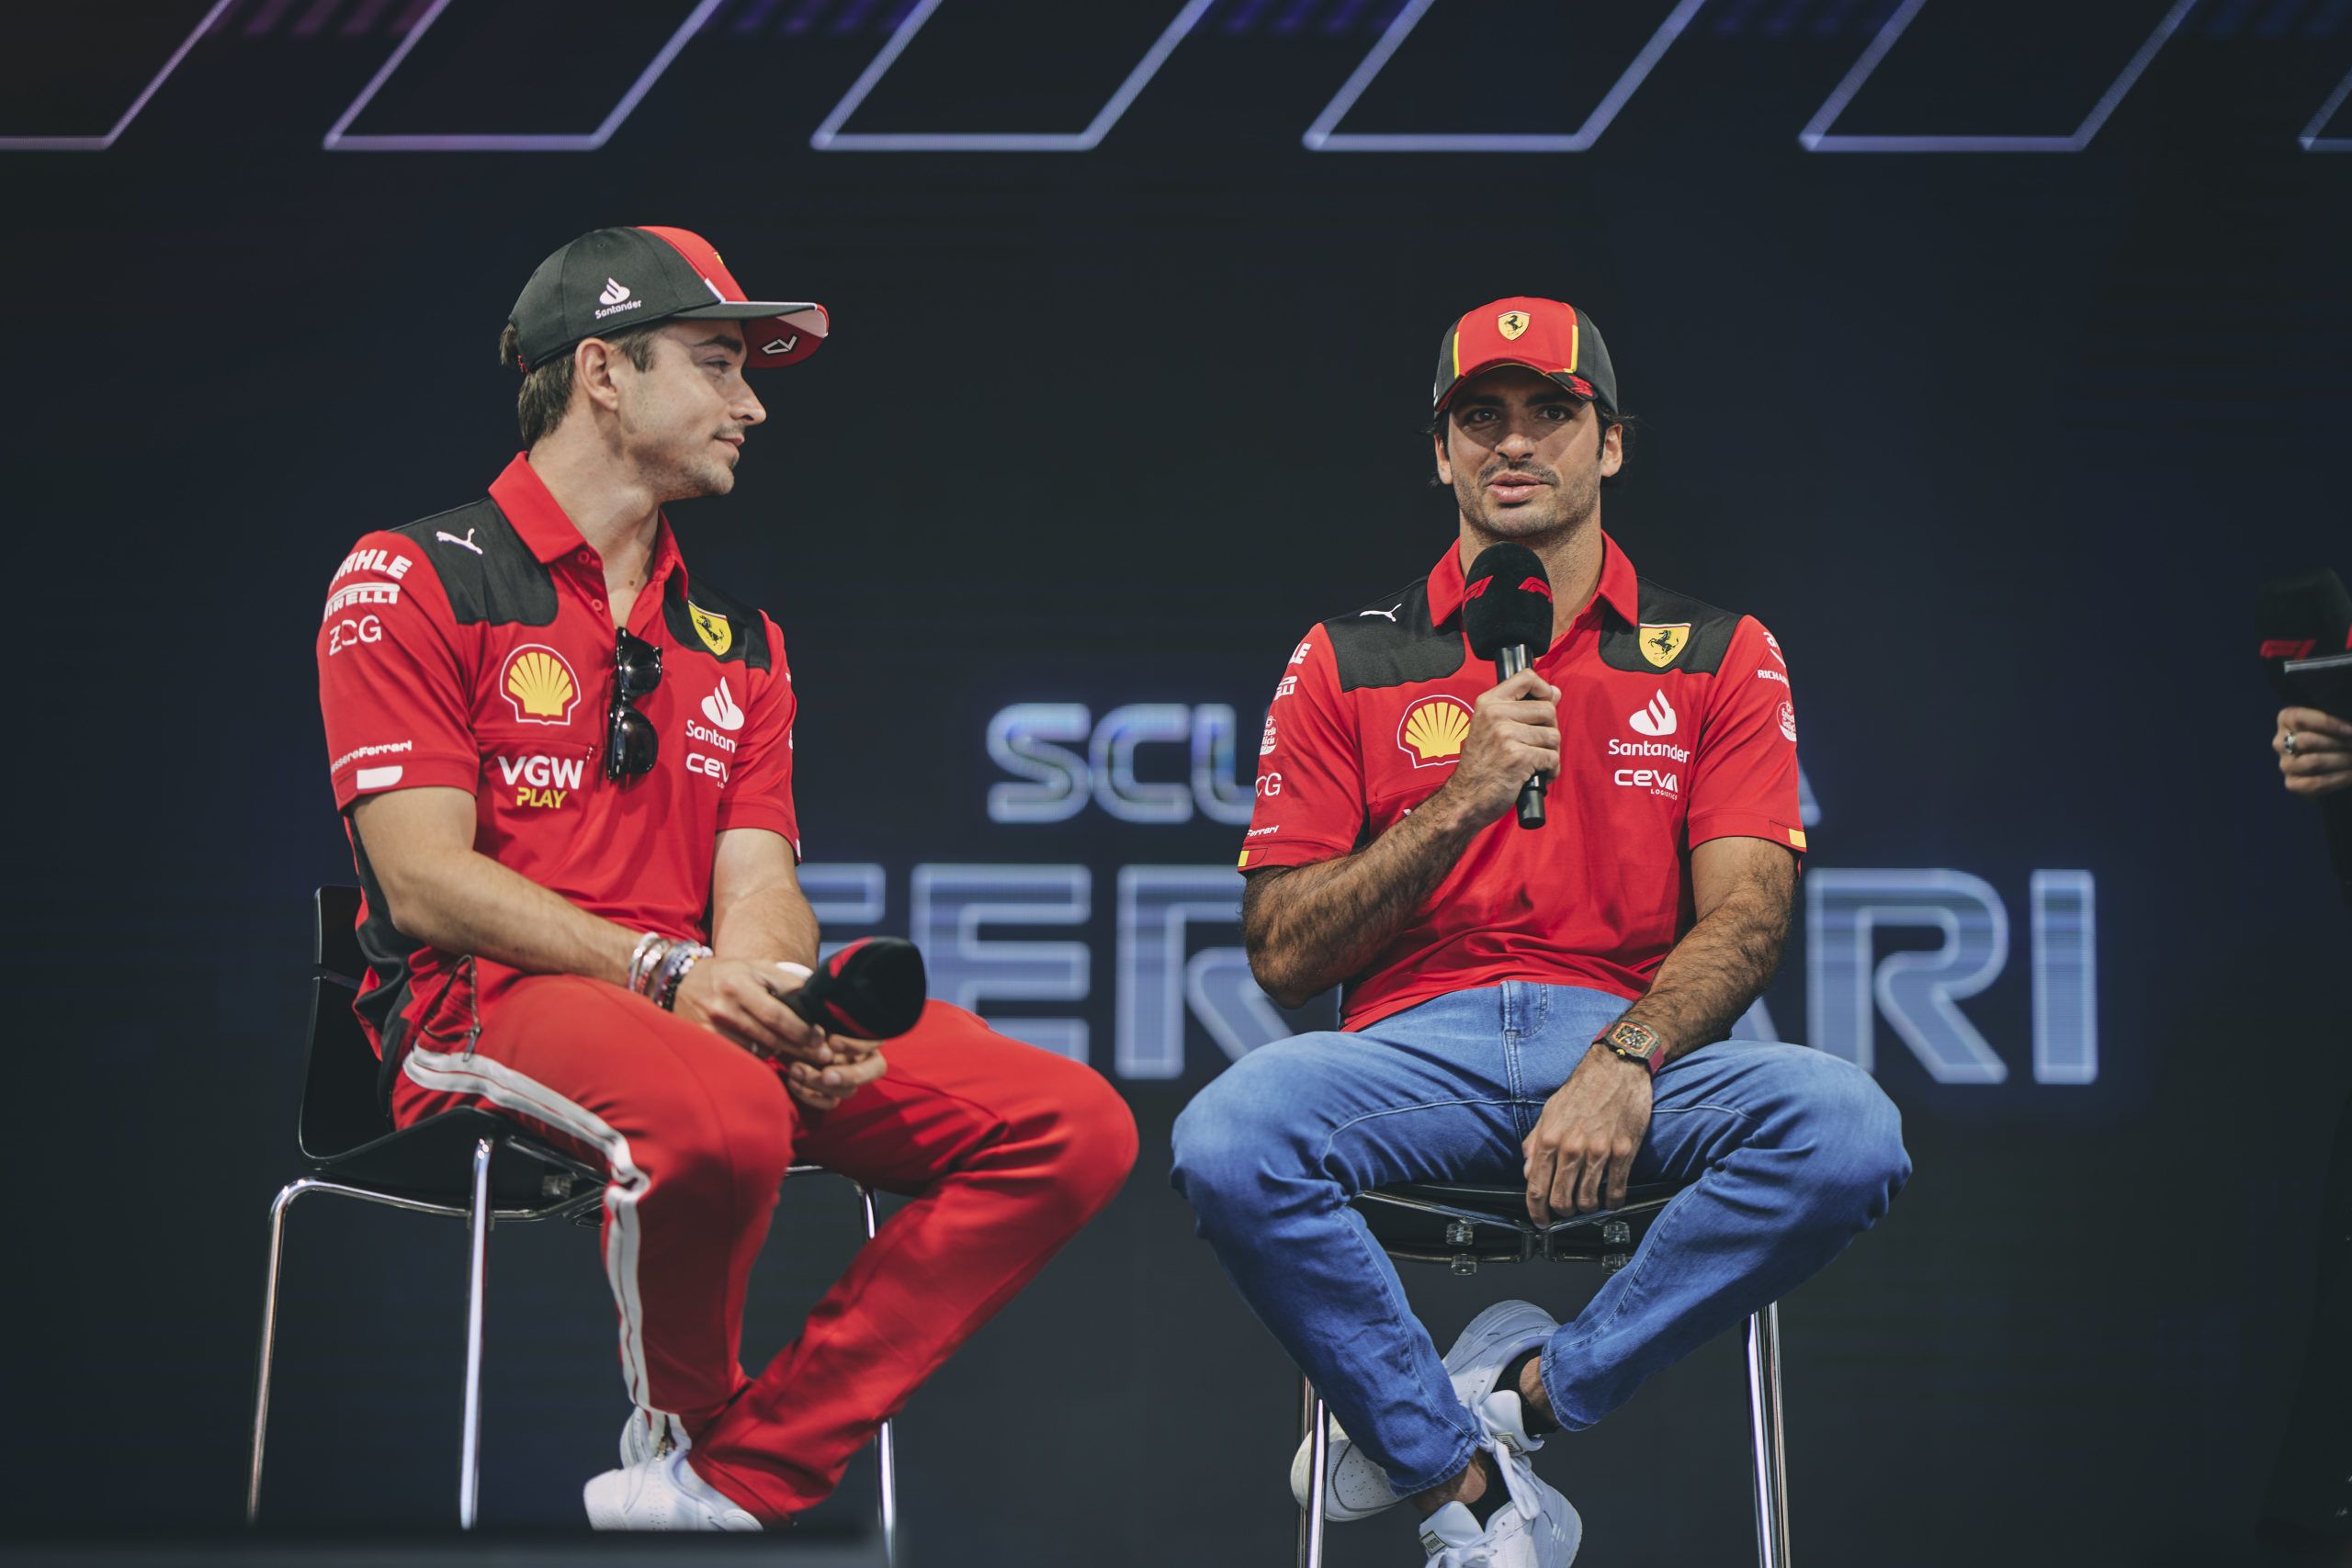 Vasseur in no rush to extend Leclerc/Sainz's contract beyond 2024